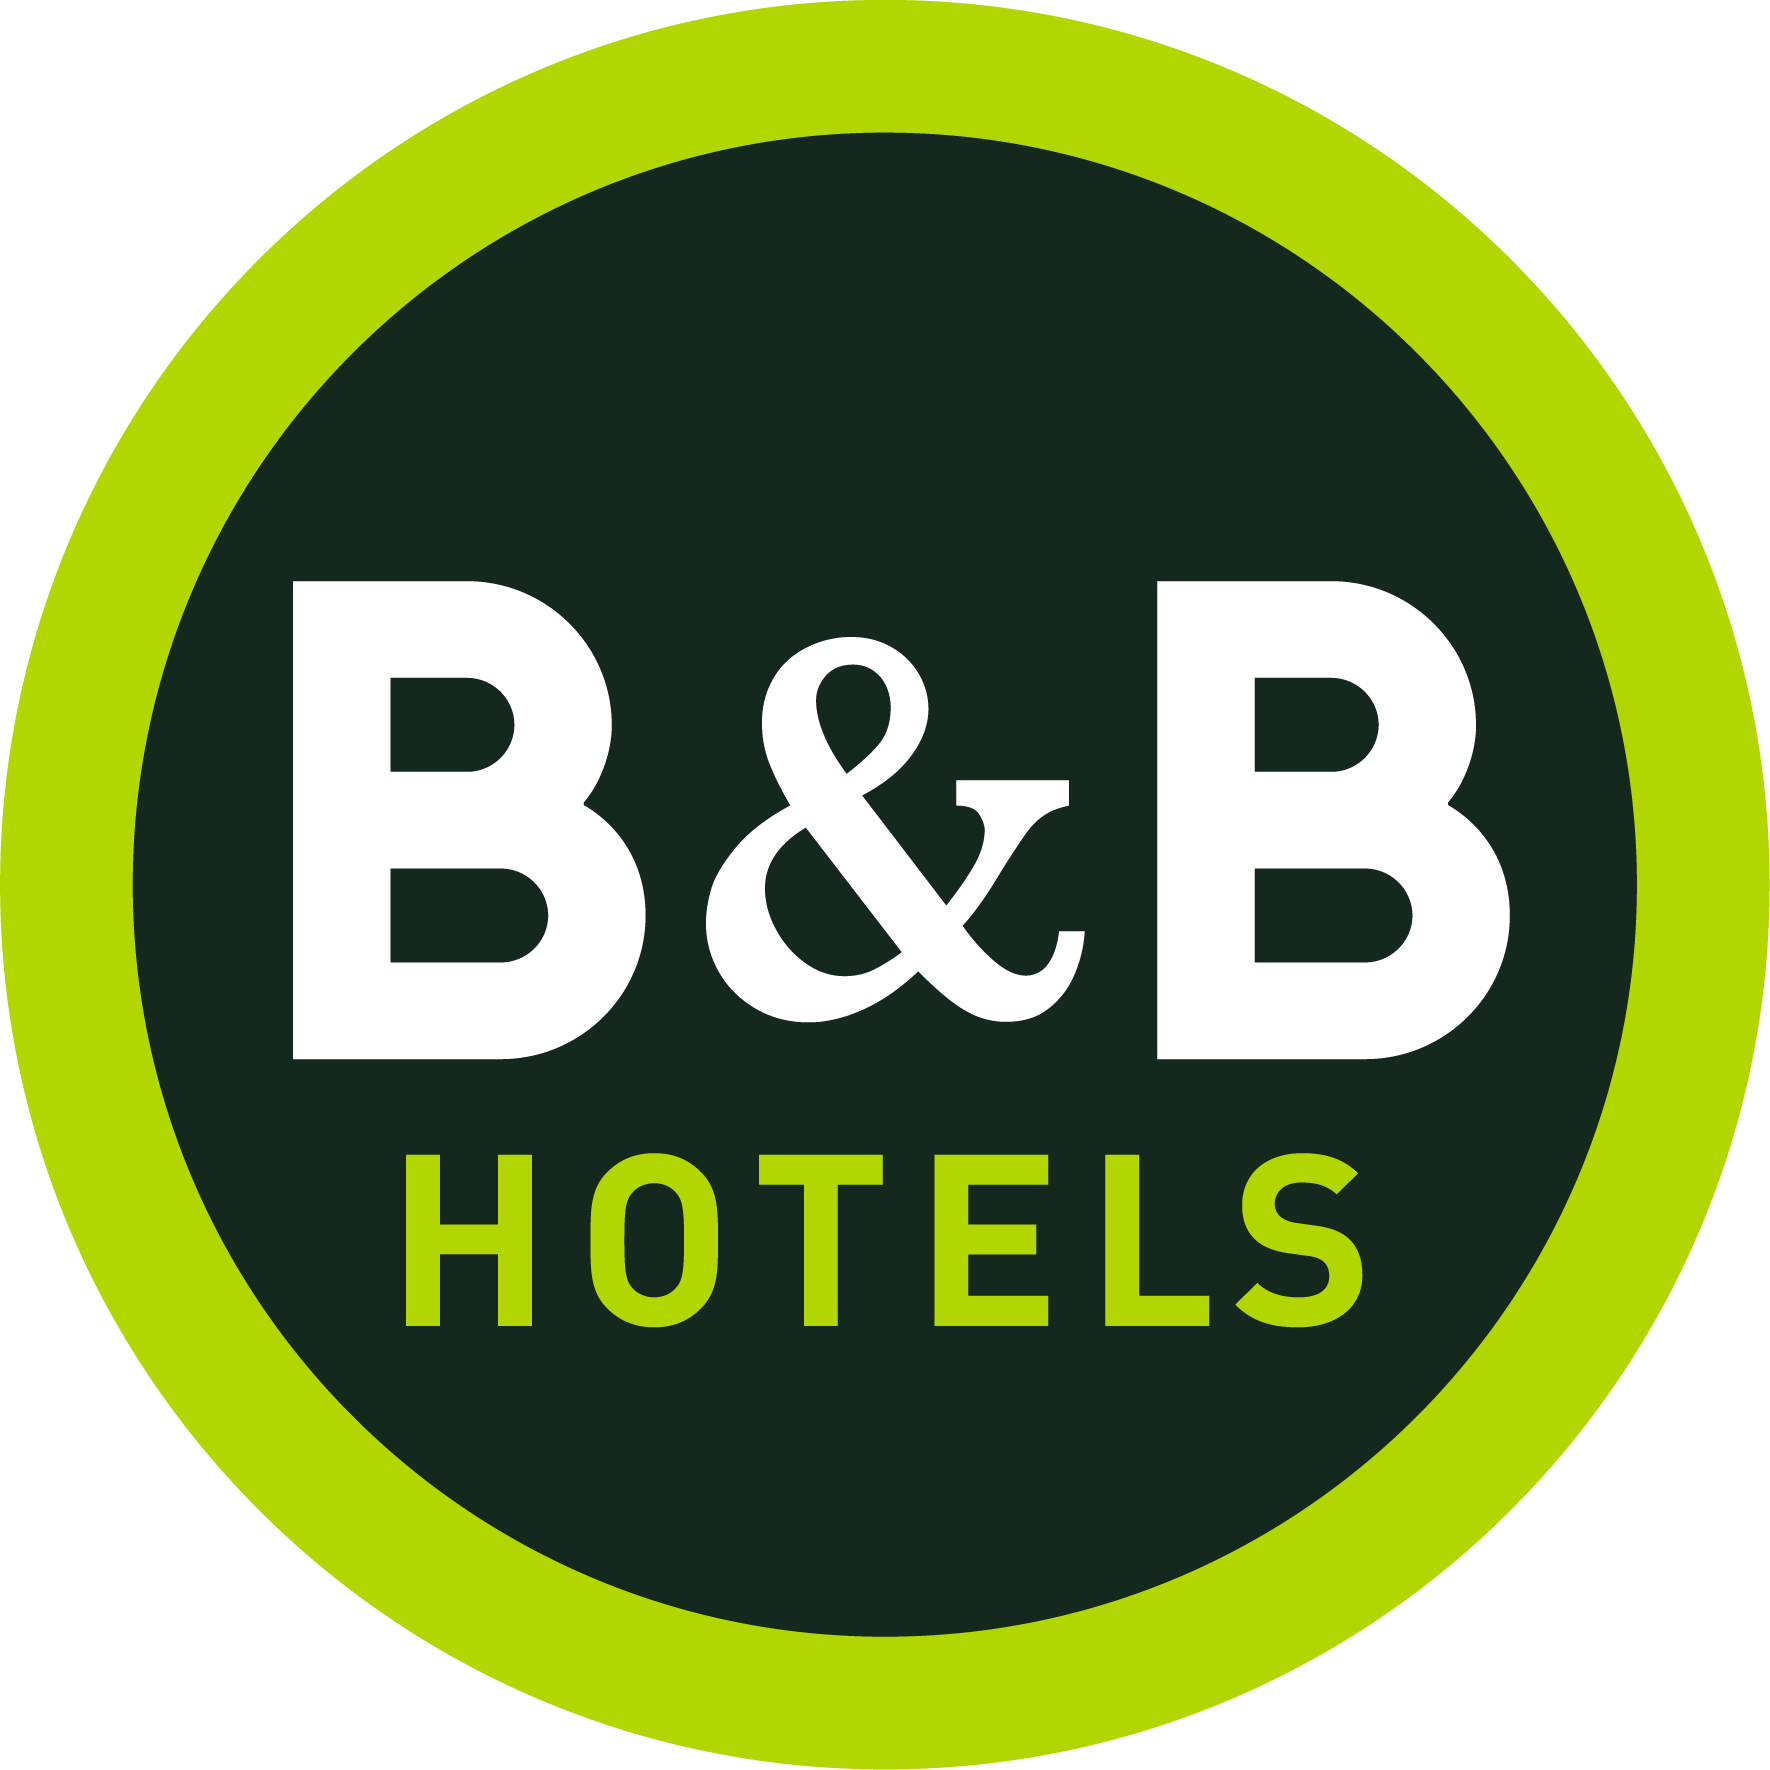 B&B HOTELS Germany GmbH - Bruchsal